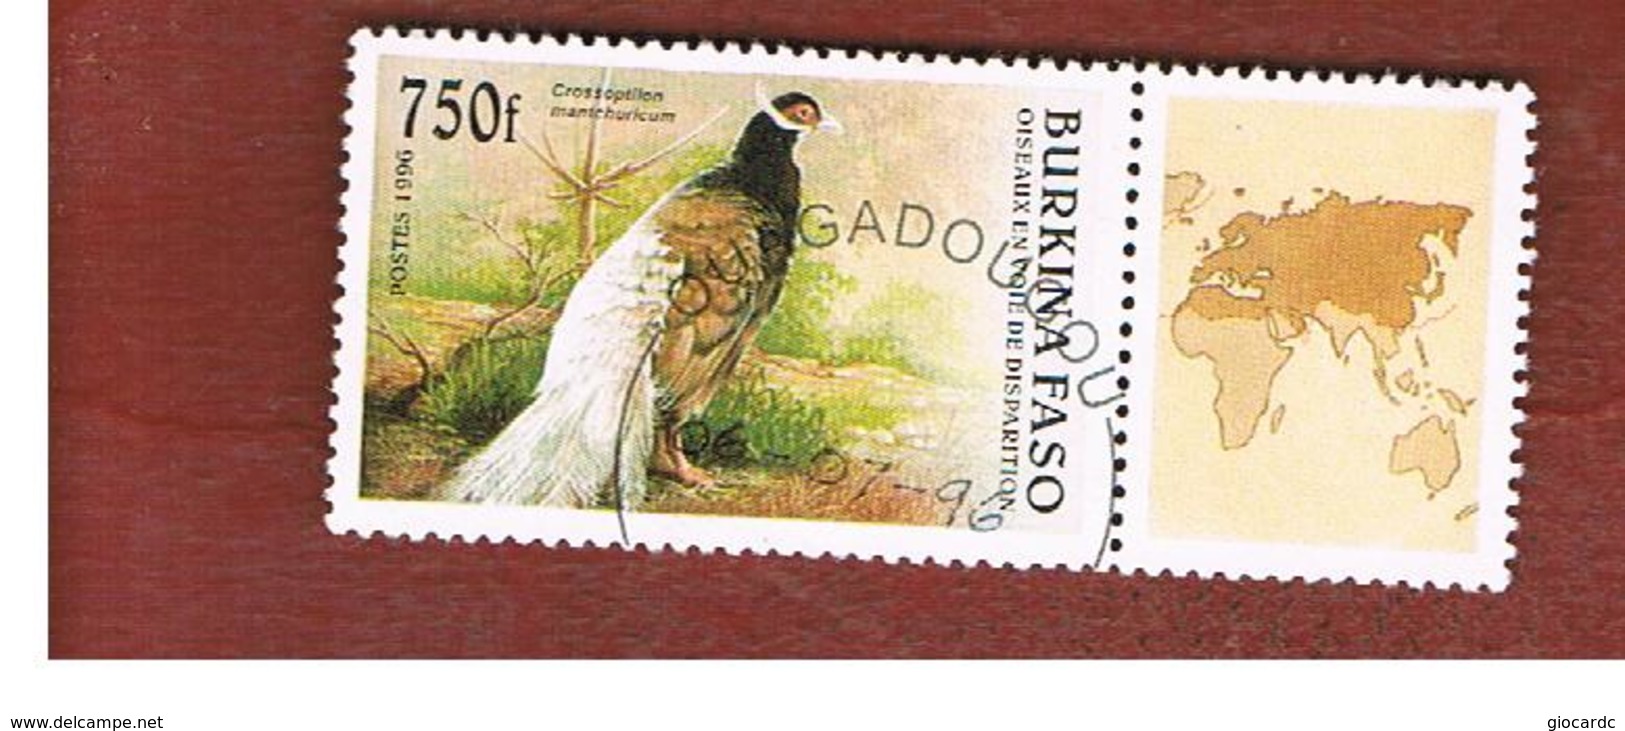 BURKINA FASO    -   MI 1407  -  1996  BIRDS: BROWN-EARED PHESANT  (WITH LABEL)   - USED ° - Burkina Faso (1984-...)